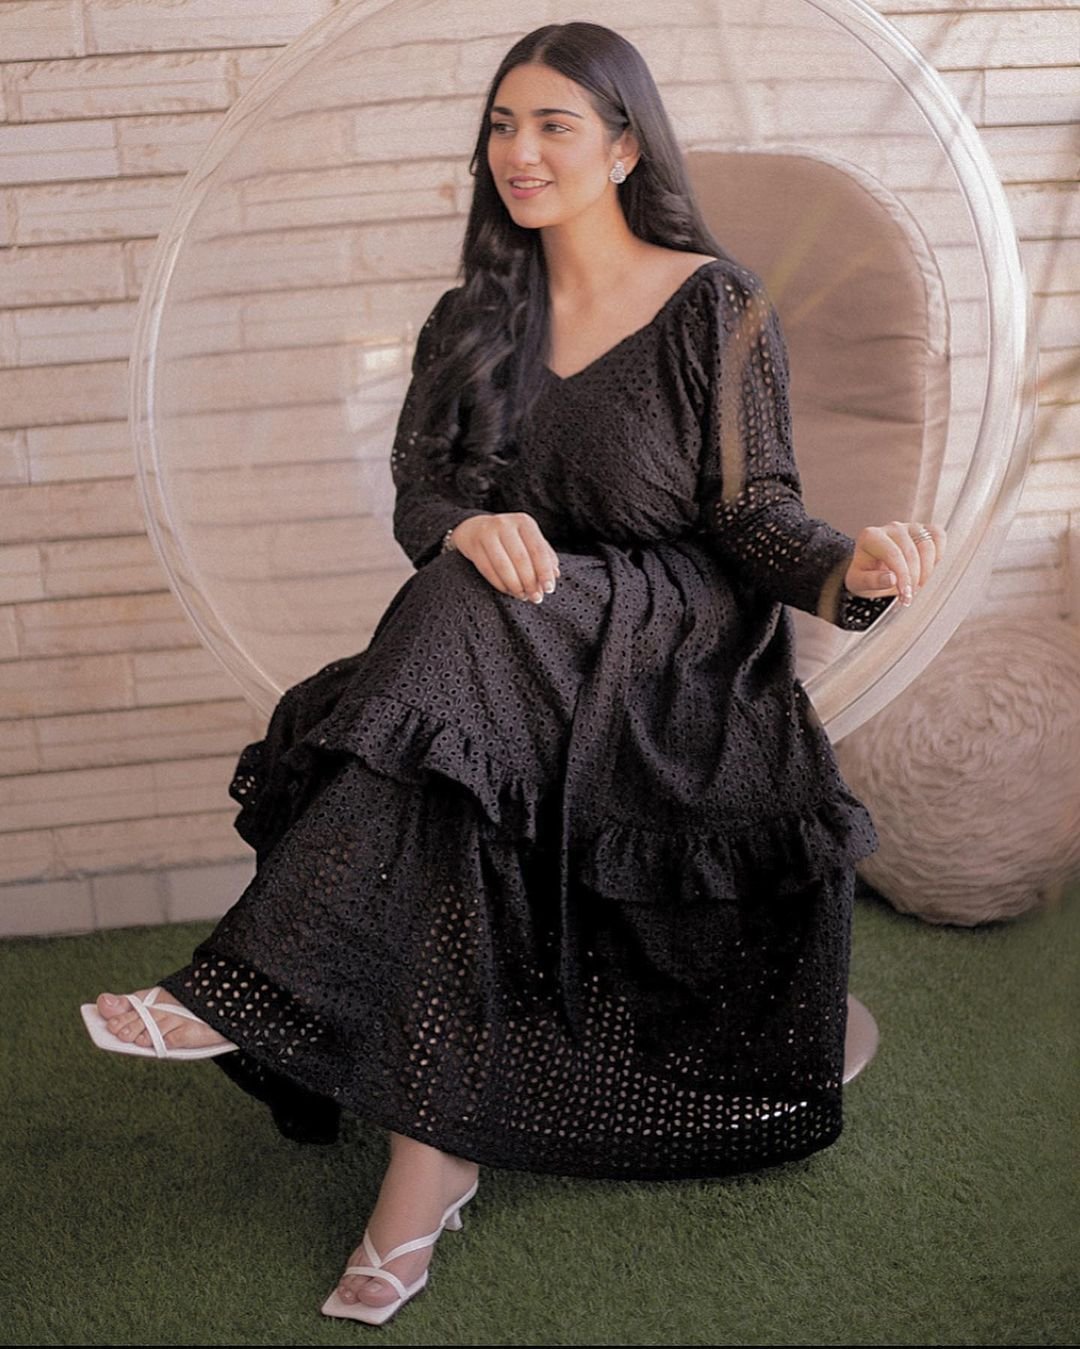 Sarah Khan Dazzles in Black Dress